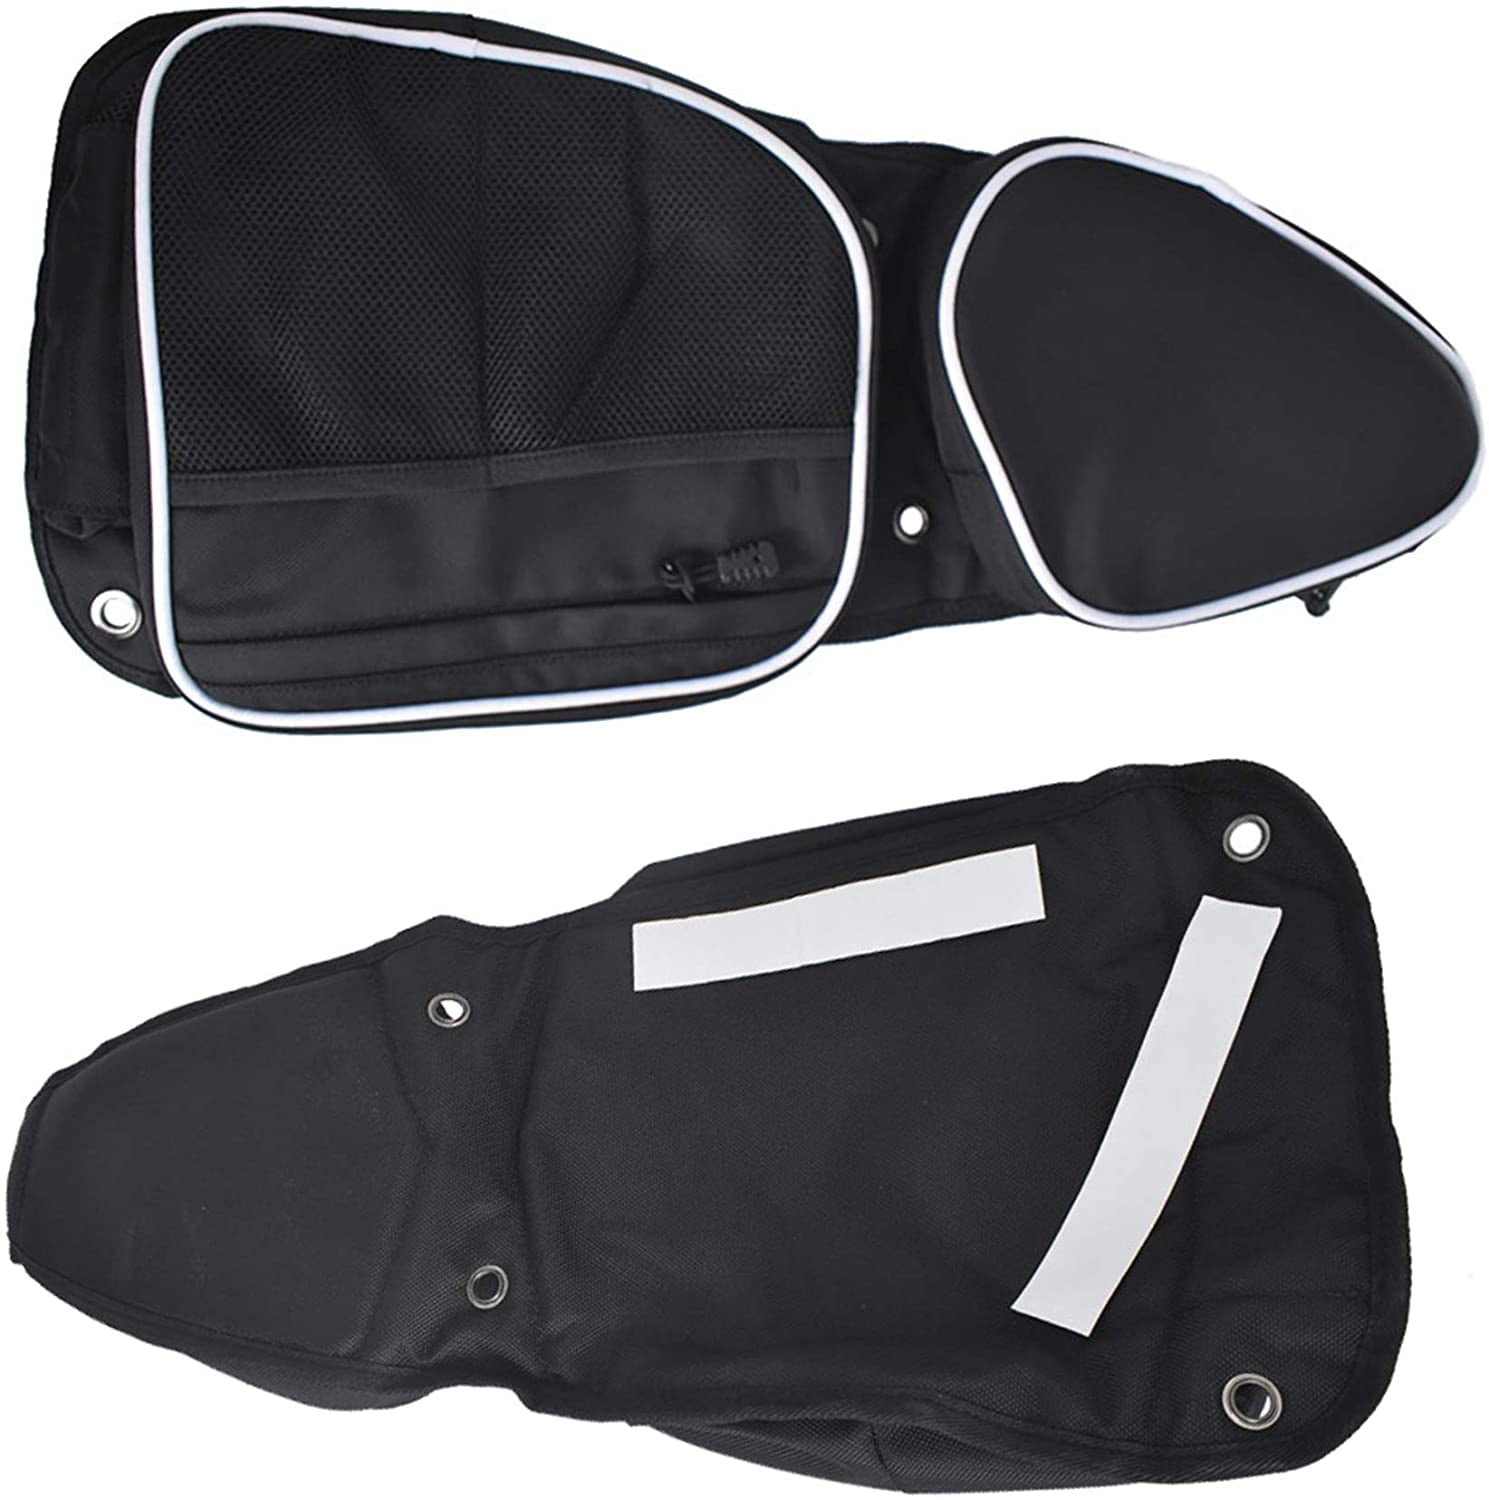 Passenger & Driver Side Storage Door Bags for Polaris XP 1000 Yamaha YXZ 1000R